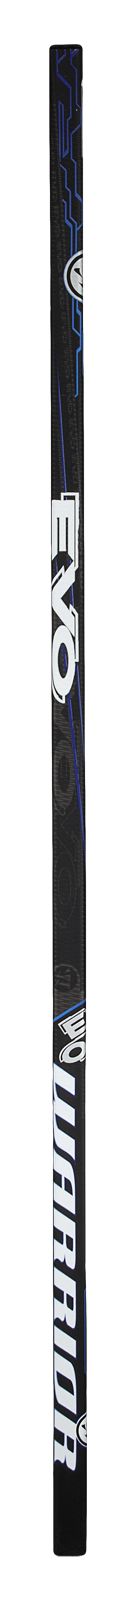 Evo Shaft, Black with White &amp; Blue image number 0